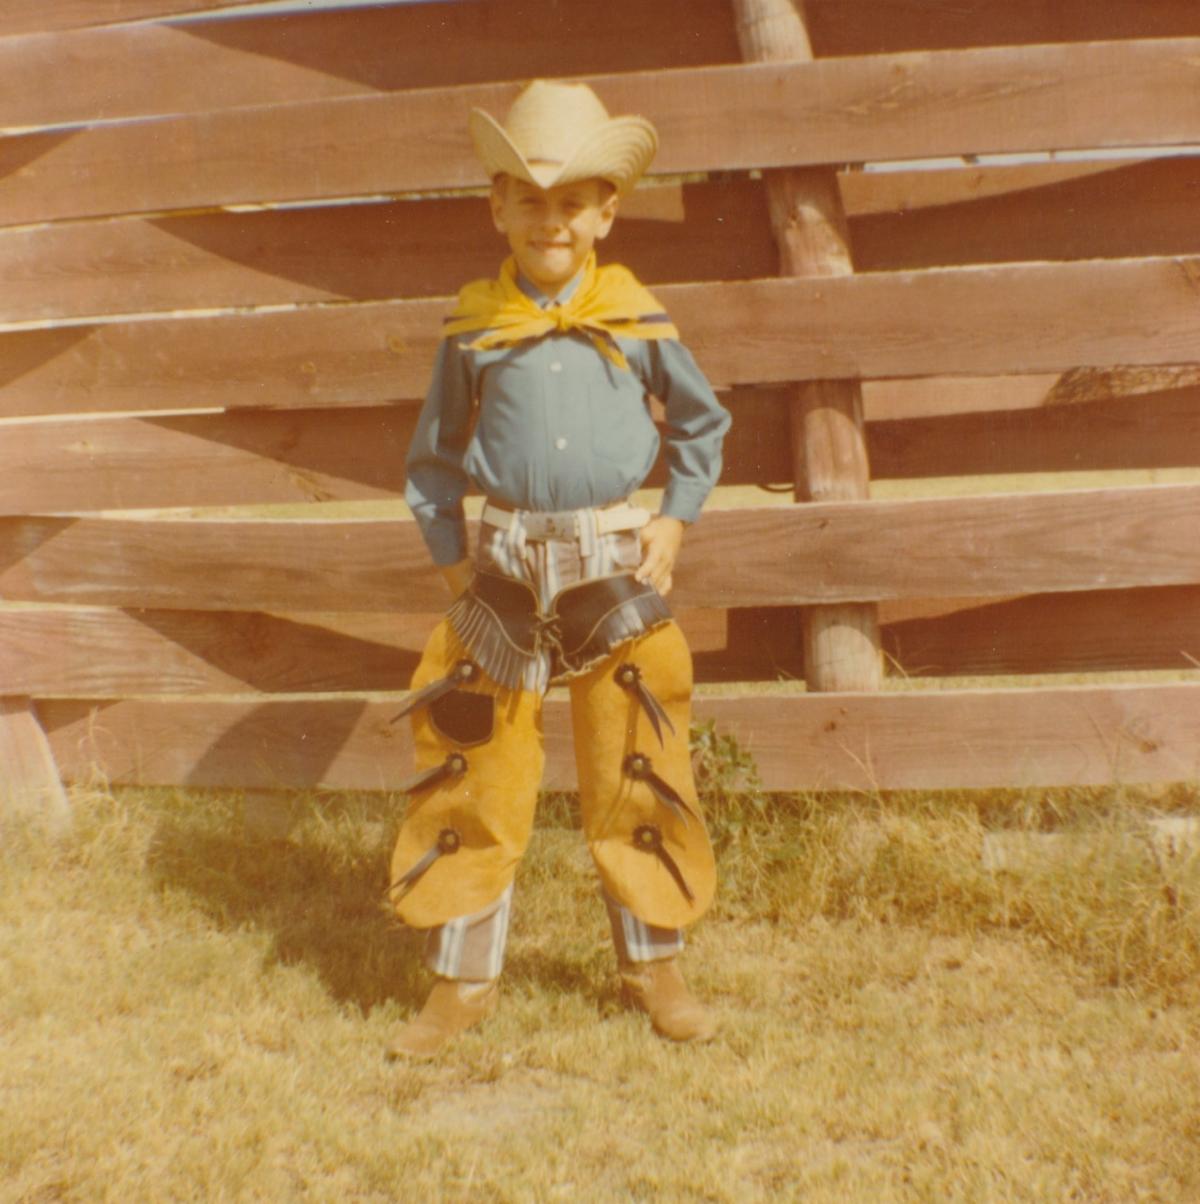 Rex Brown childhood archival photo.